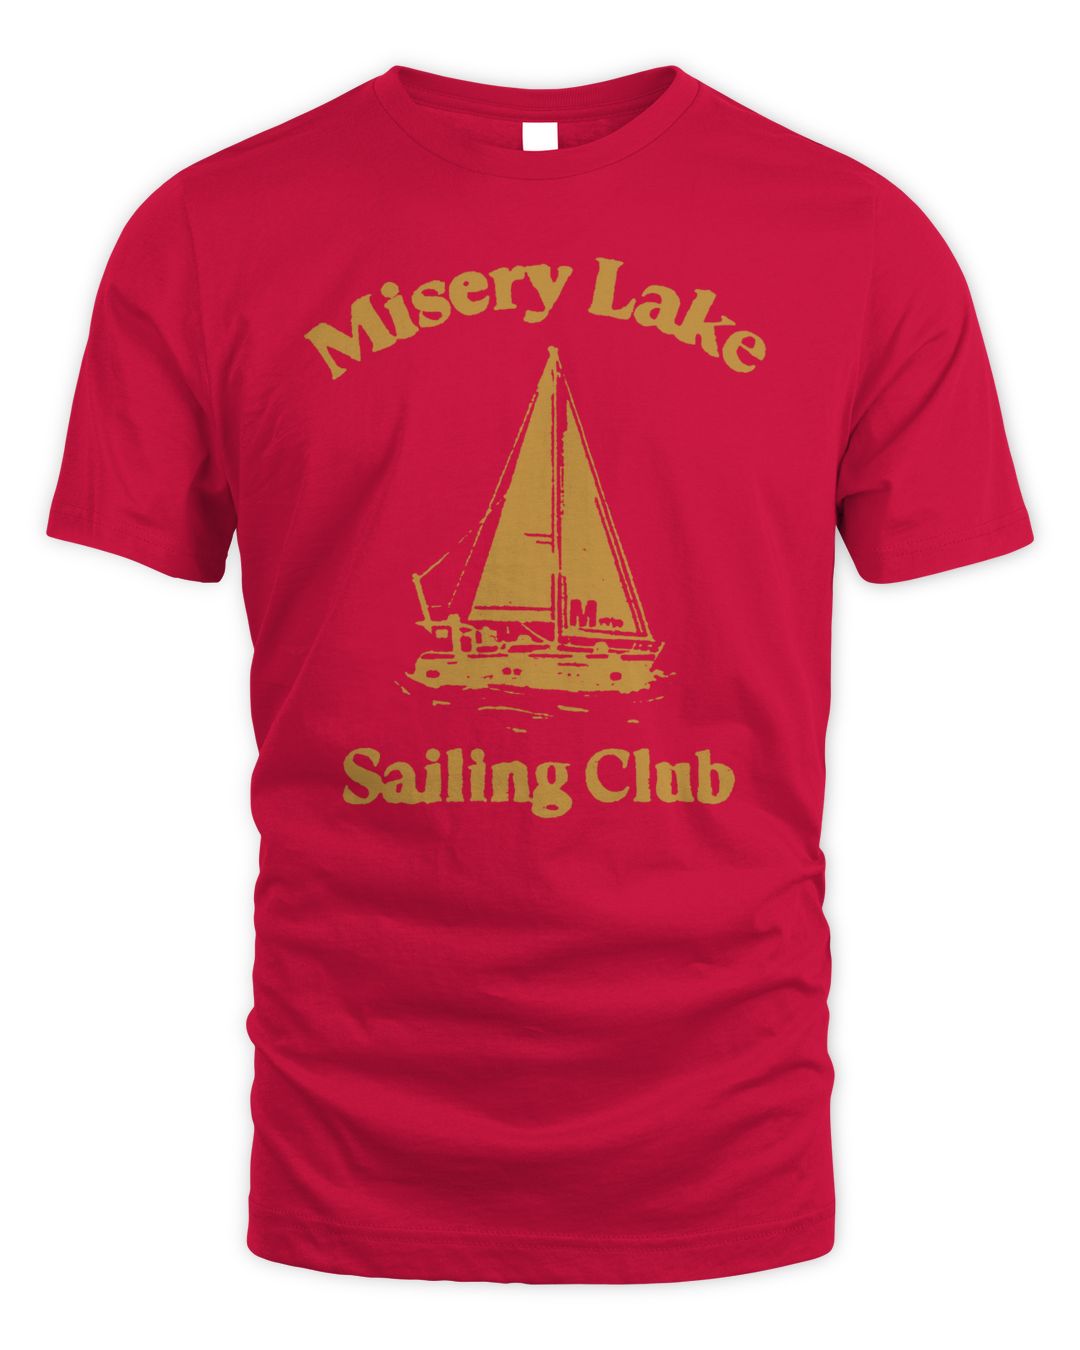 Blackbear Merch Misery Lake Sailing Club Shirt